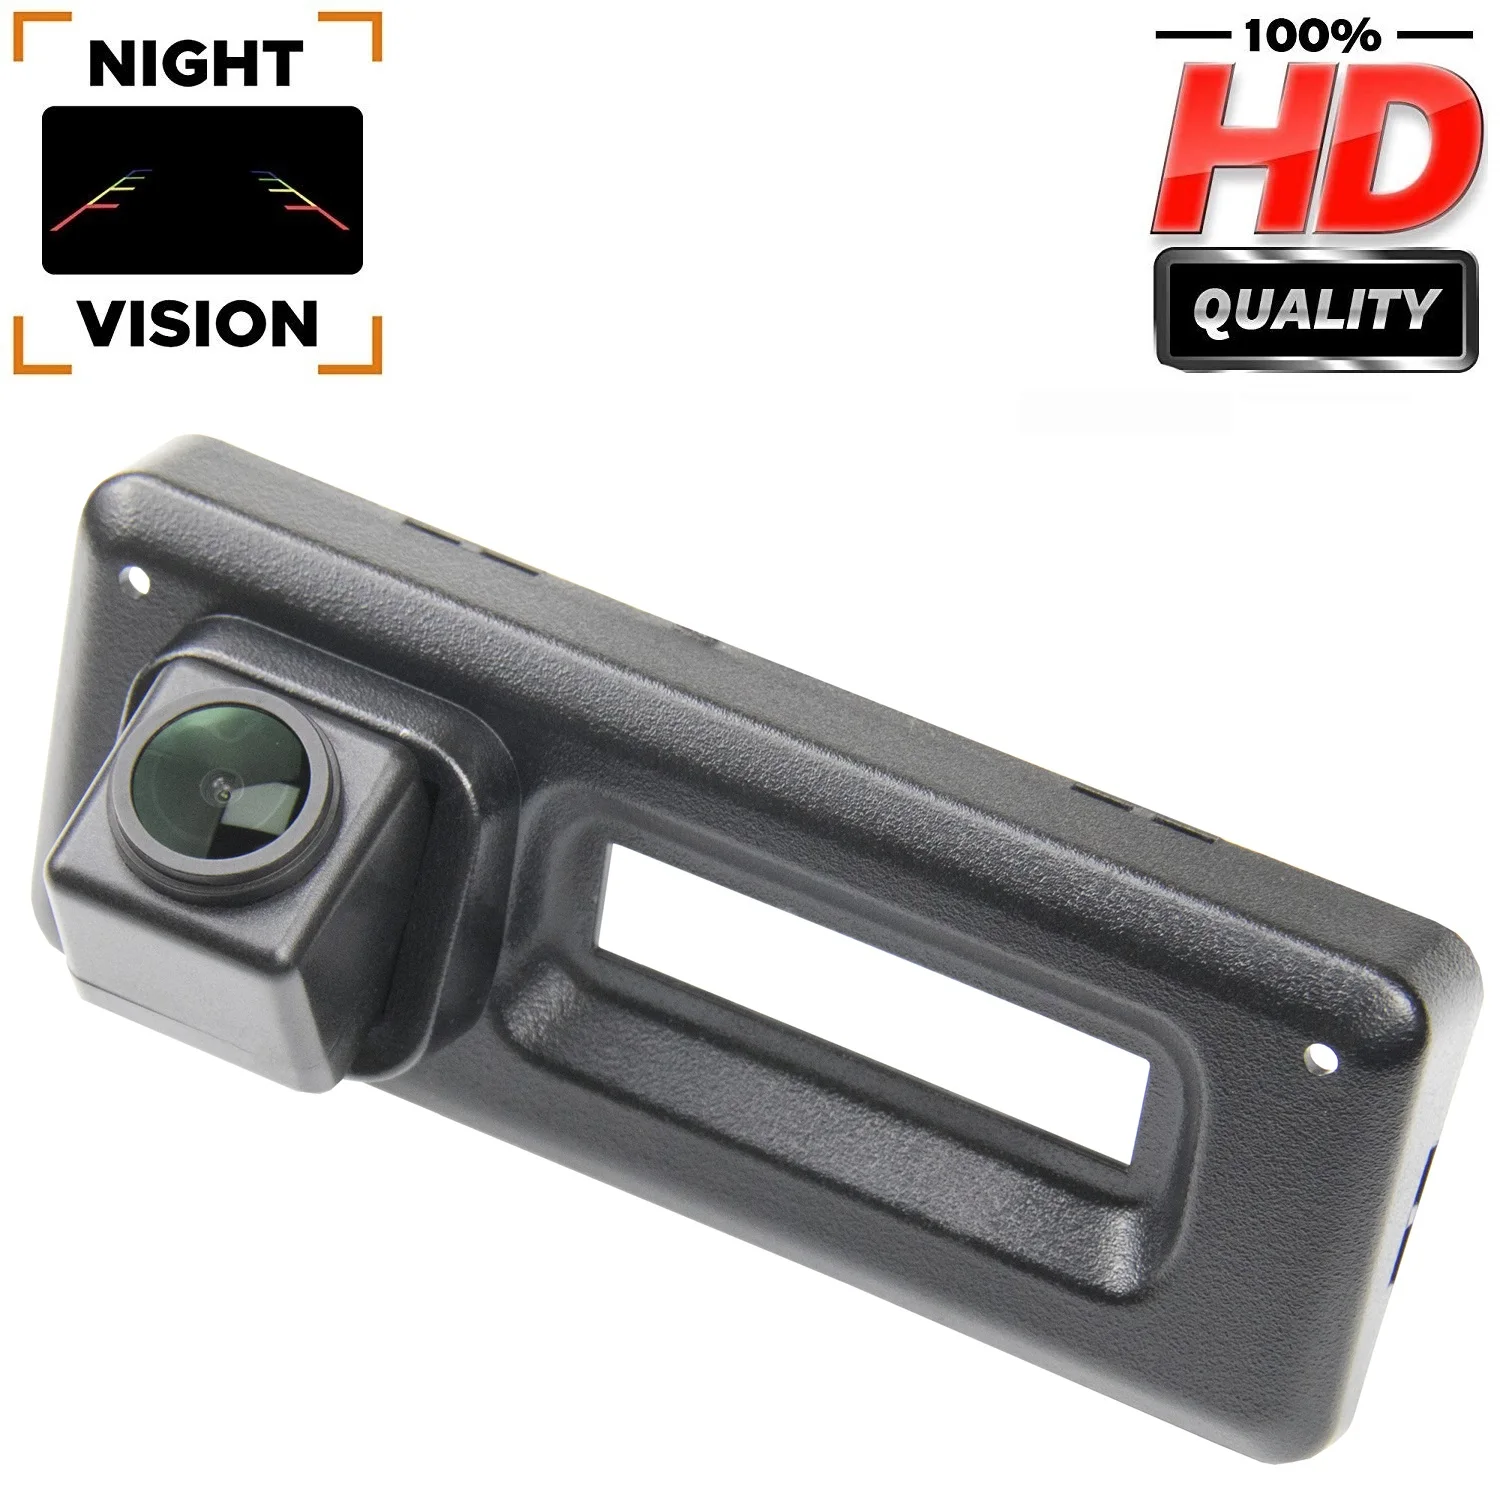 

HD 1280*720P Night Vision Camera Rear View Camera for Renault Koleos 2010-2016, Misayaee Reversing Backup Waterproof Camera